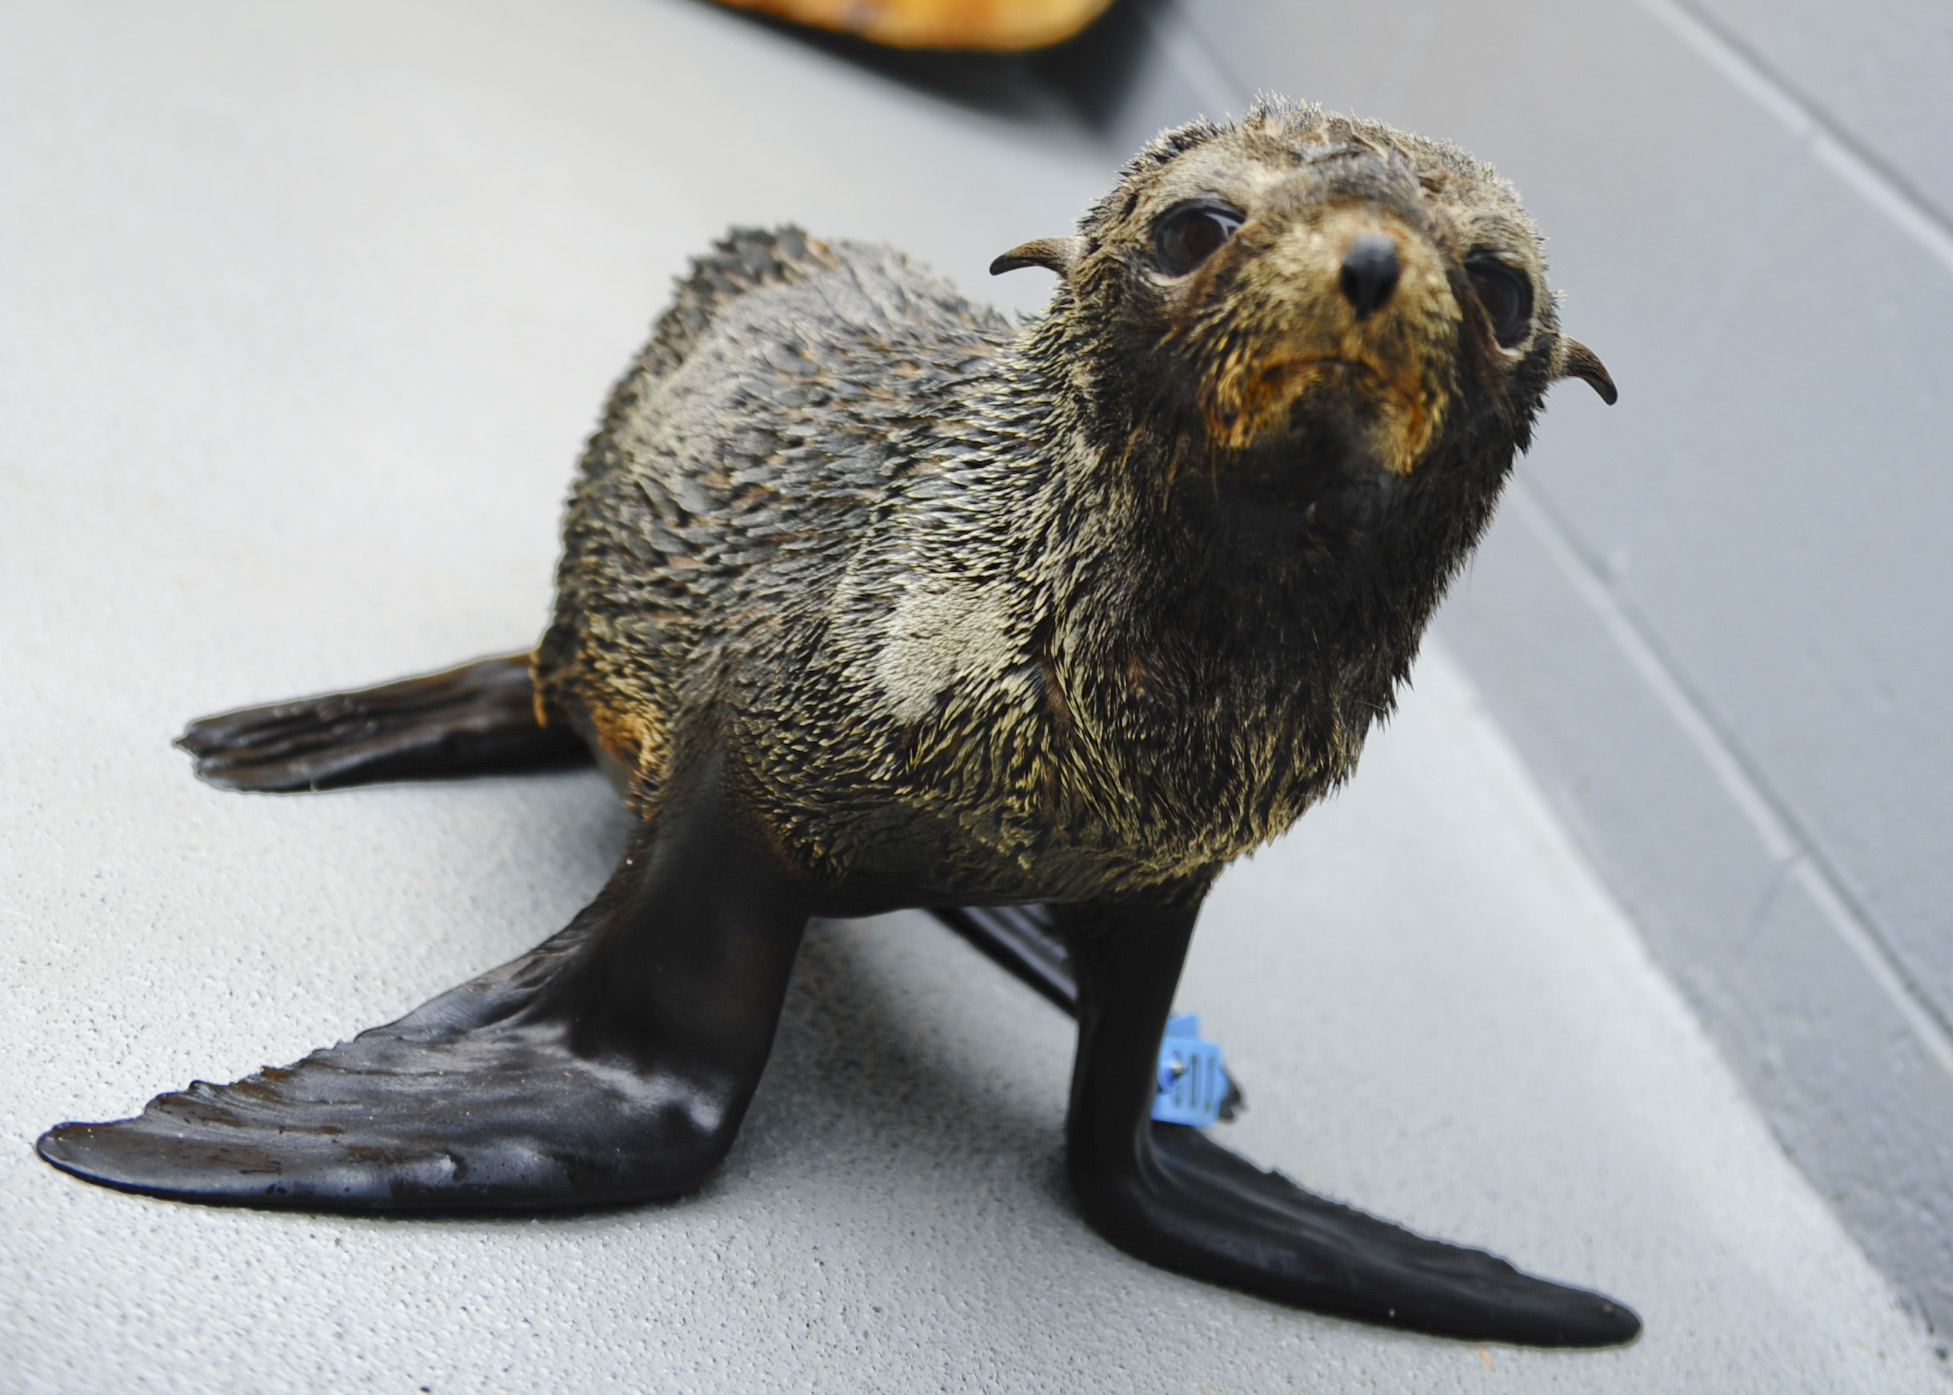 Guadalupe Fur Seal Pups Stranded at Alarming Rate | Time